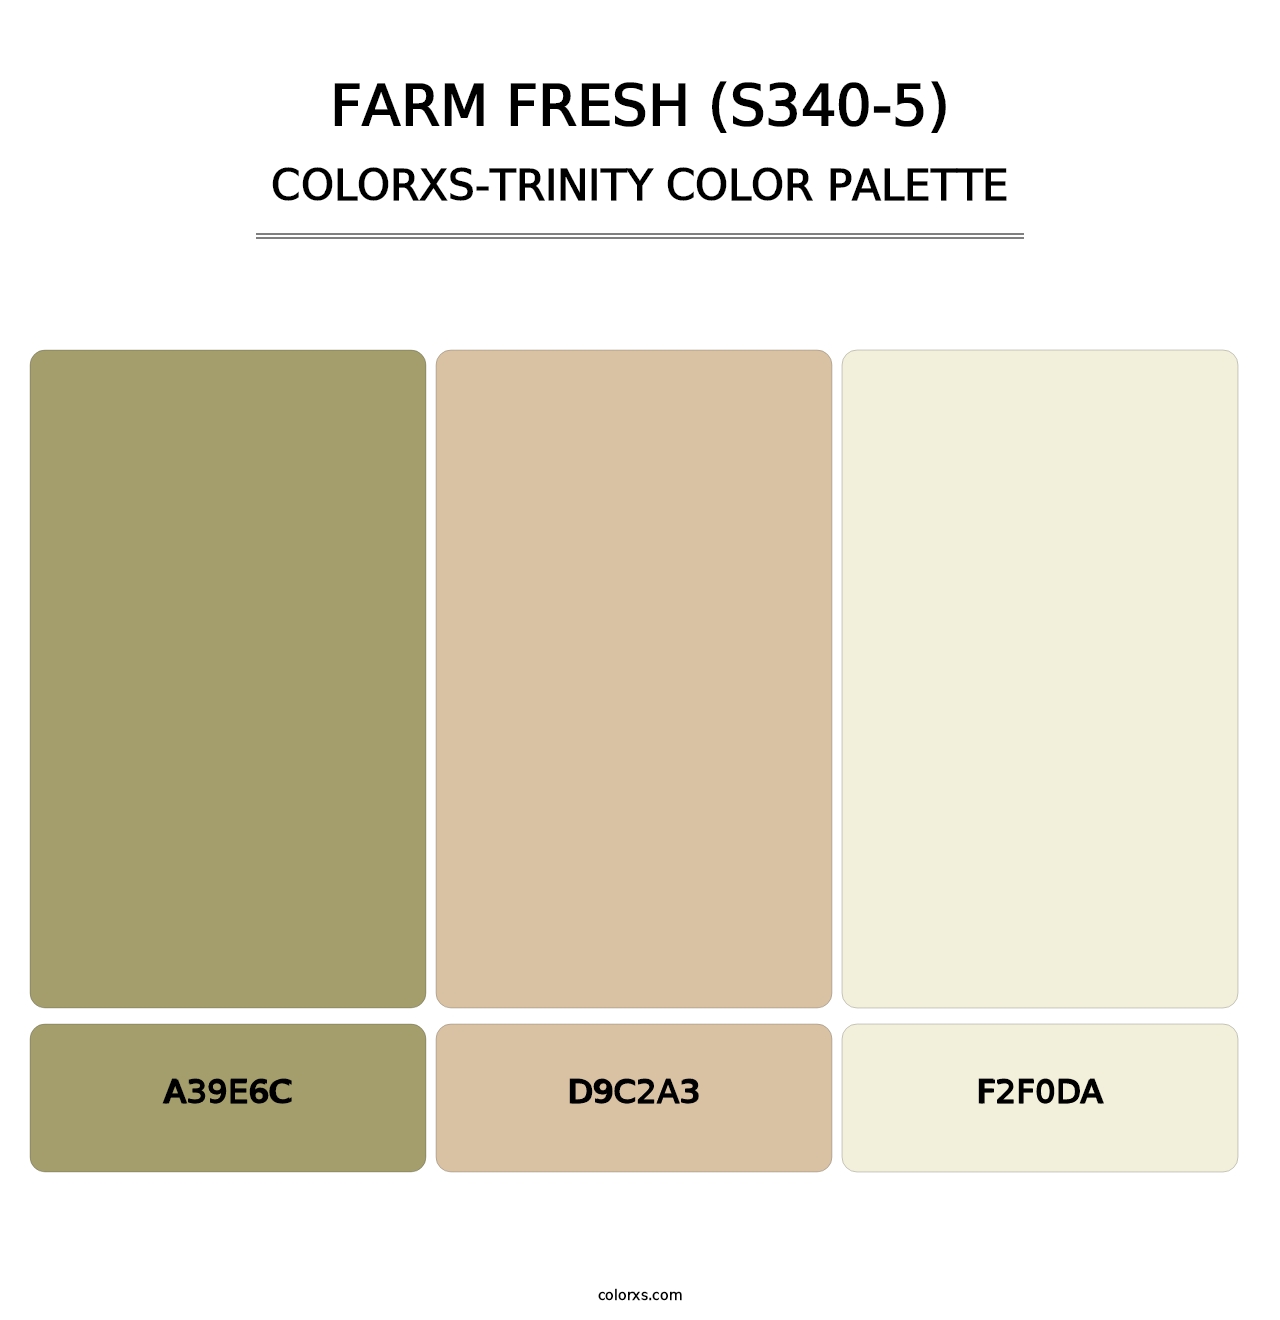 Farm Fresh (S340-5) - Colorxs Trinity Palette